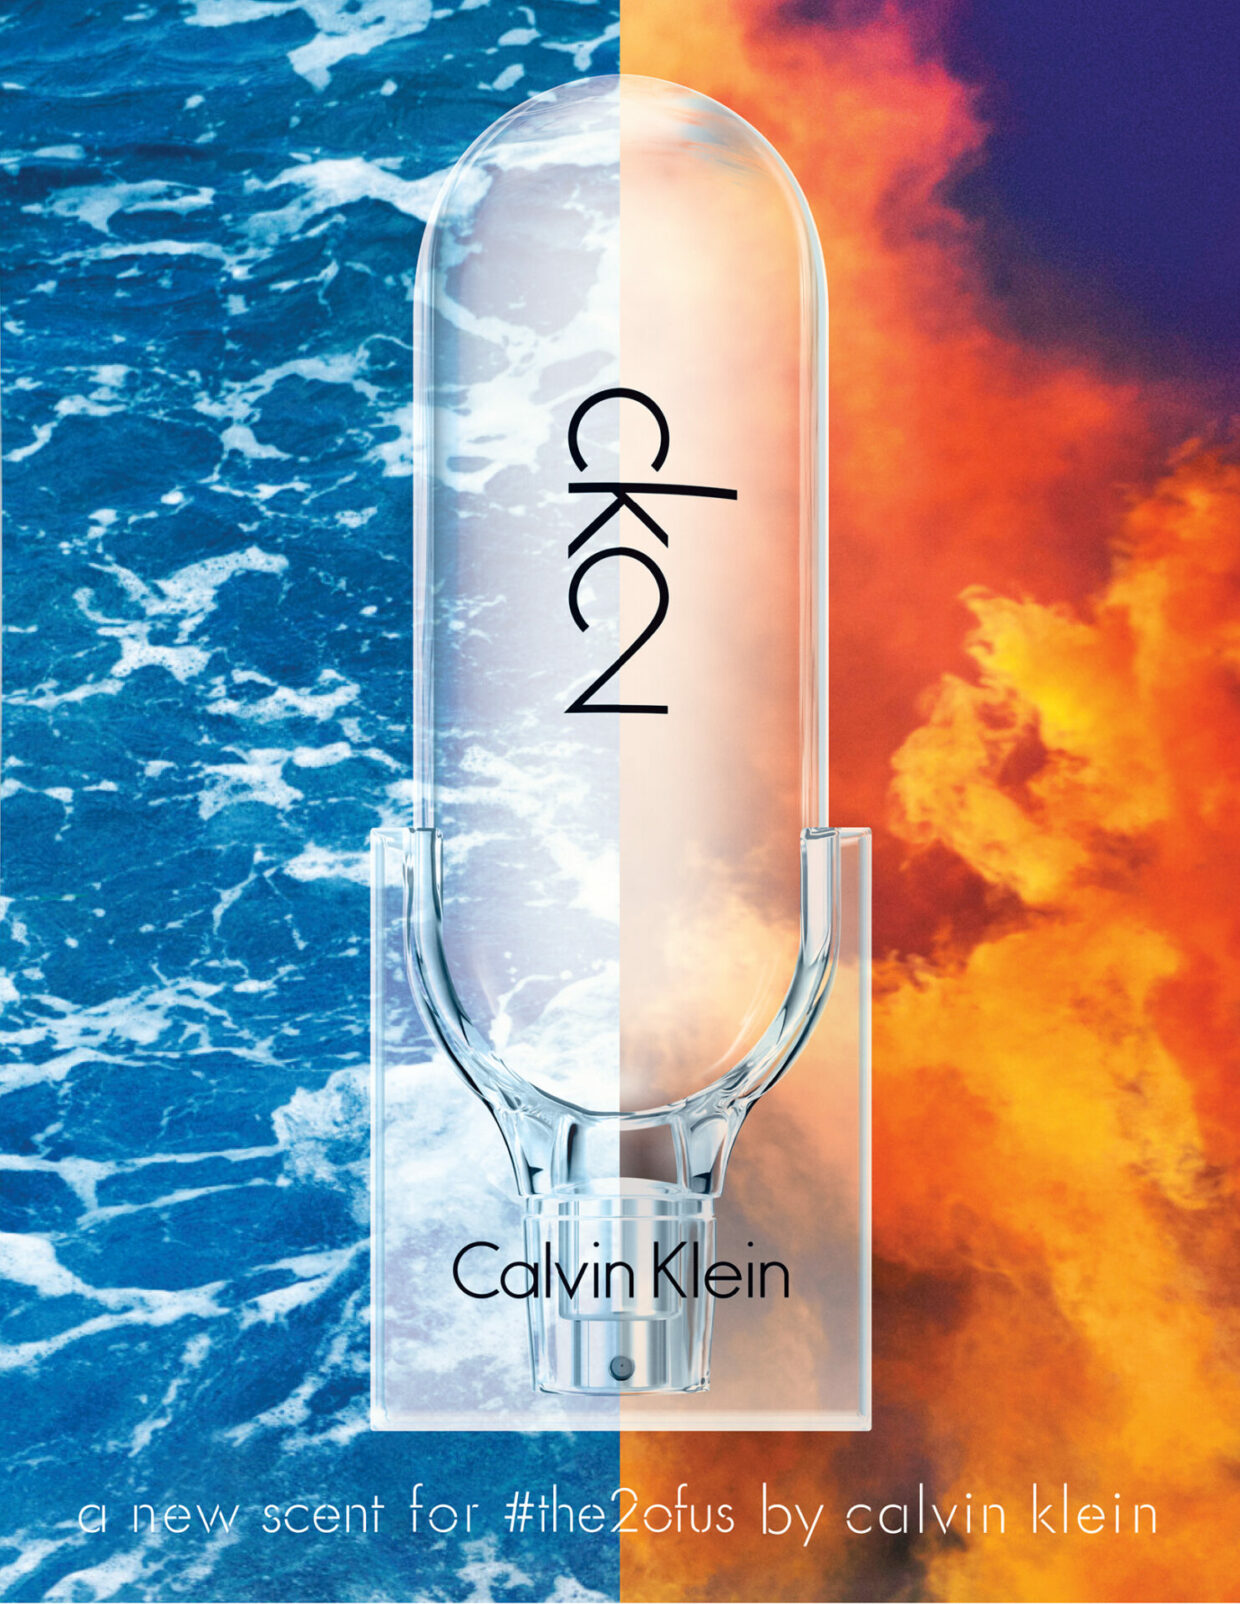 Robin Broadbent Photographed Calvin Klein’s Latest Fragrance, CK2 | 1